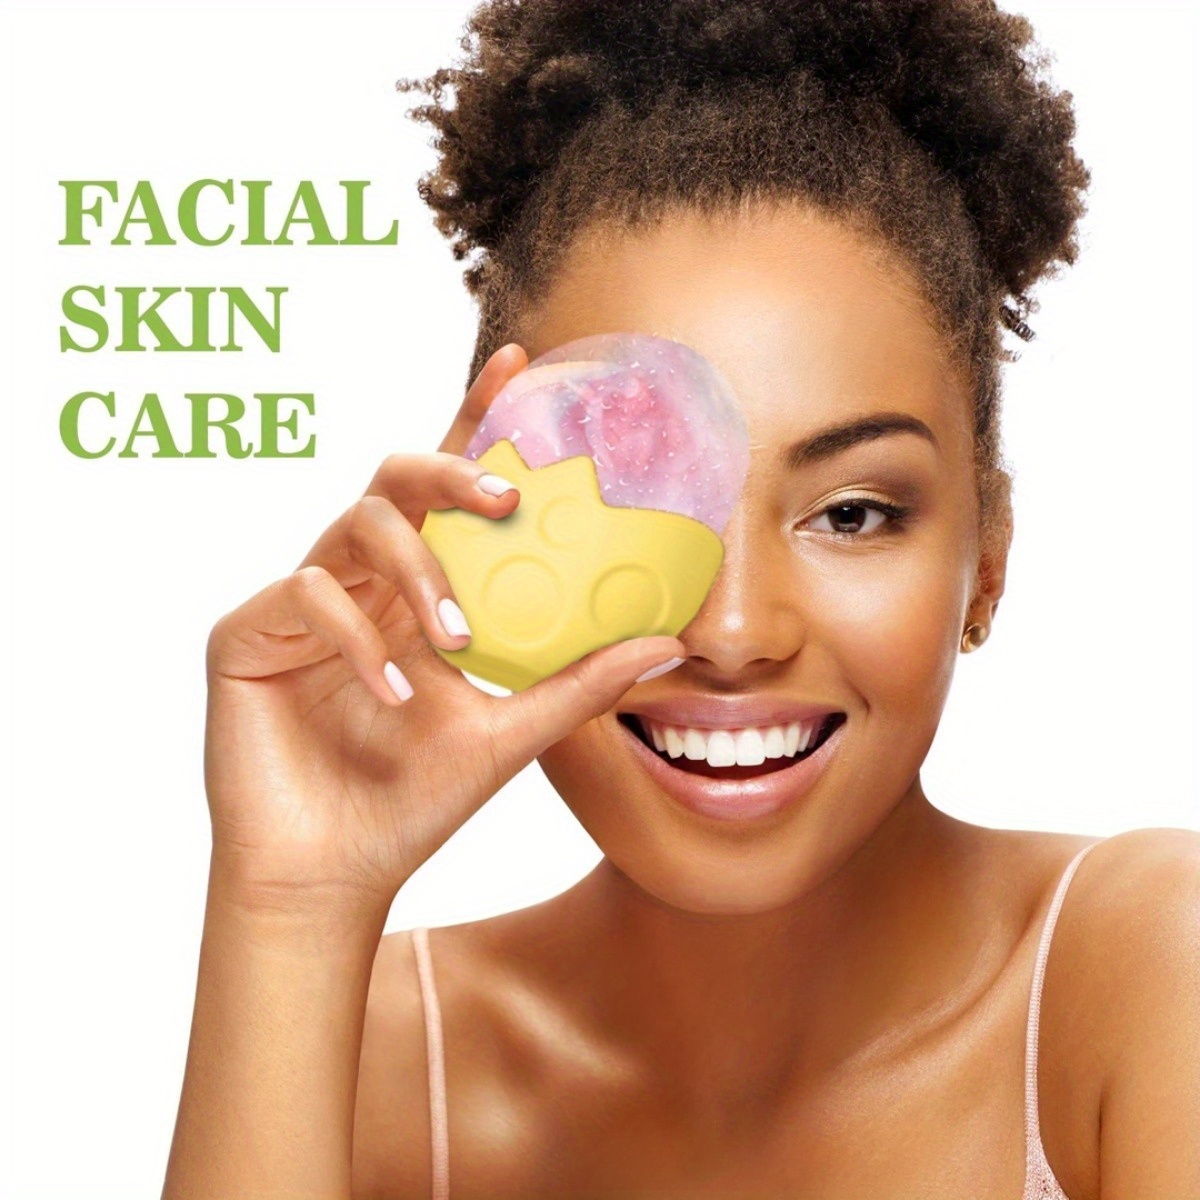 Skin Care Beauty Lifting Contouring Tool Silicone Ice Cube - Temu